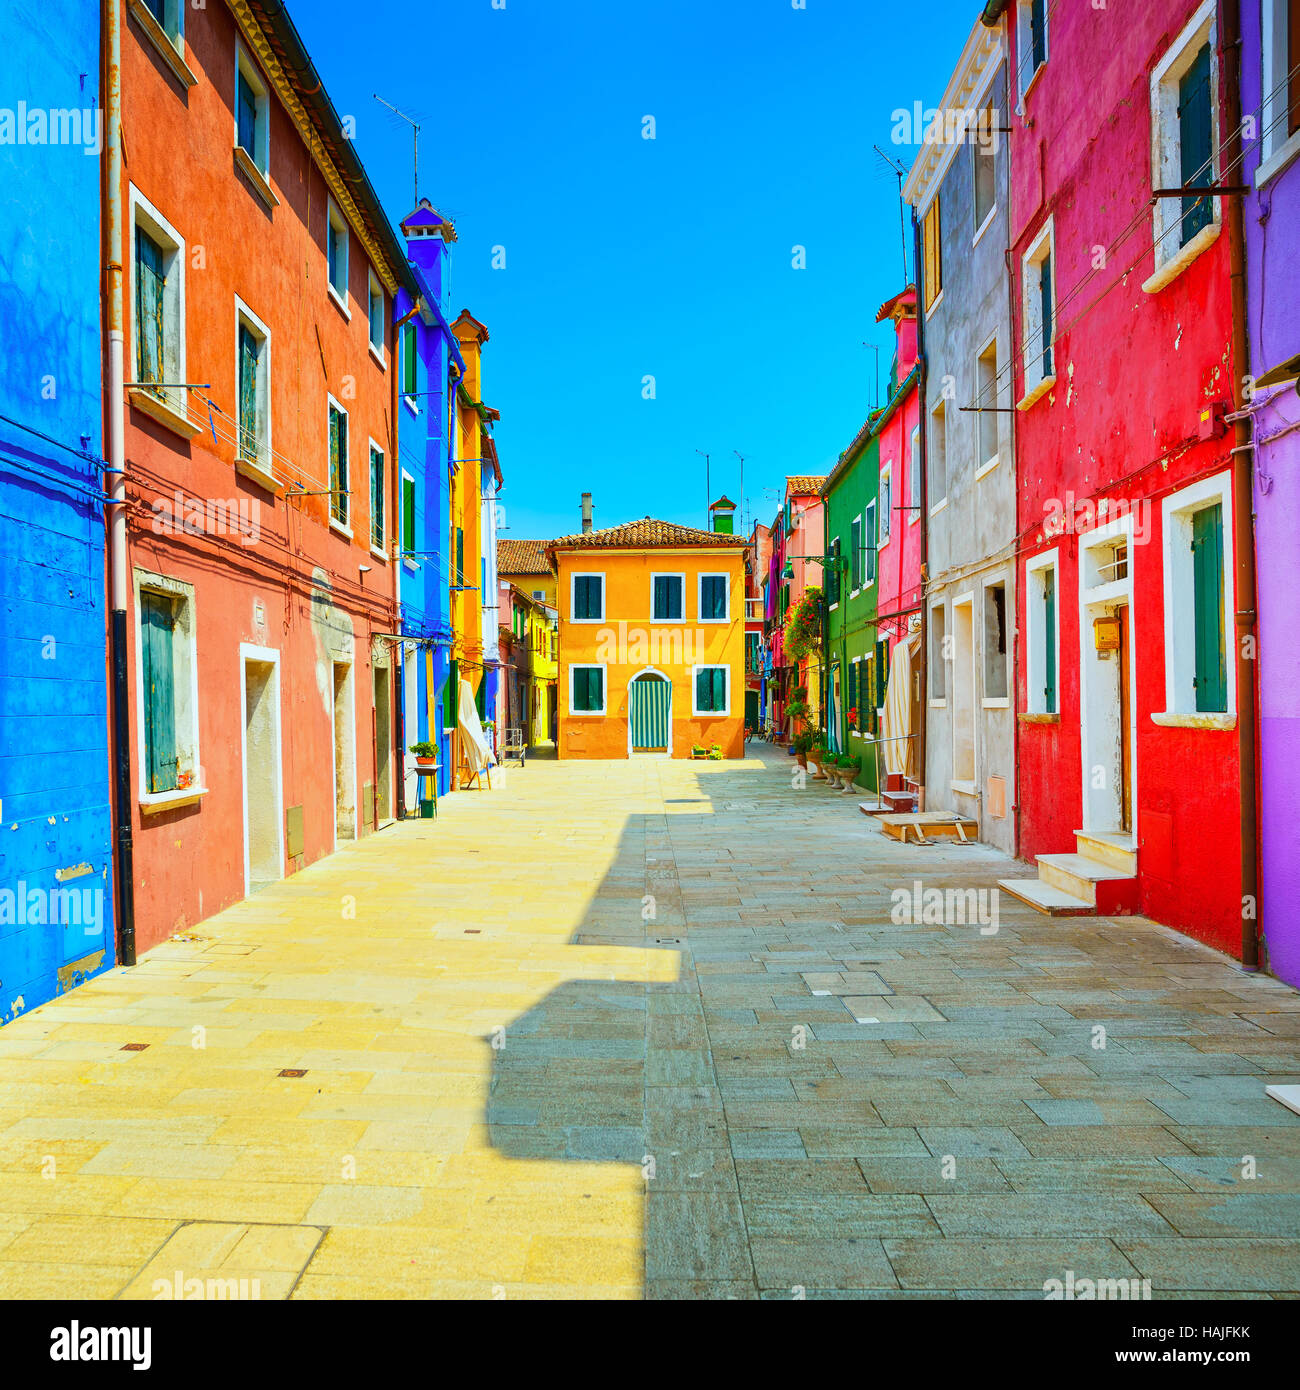 Venice landmark, Burano island street, colorful houses, Italy, Europe. Stock Photo